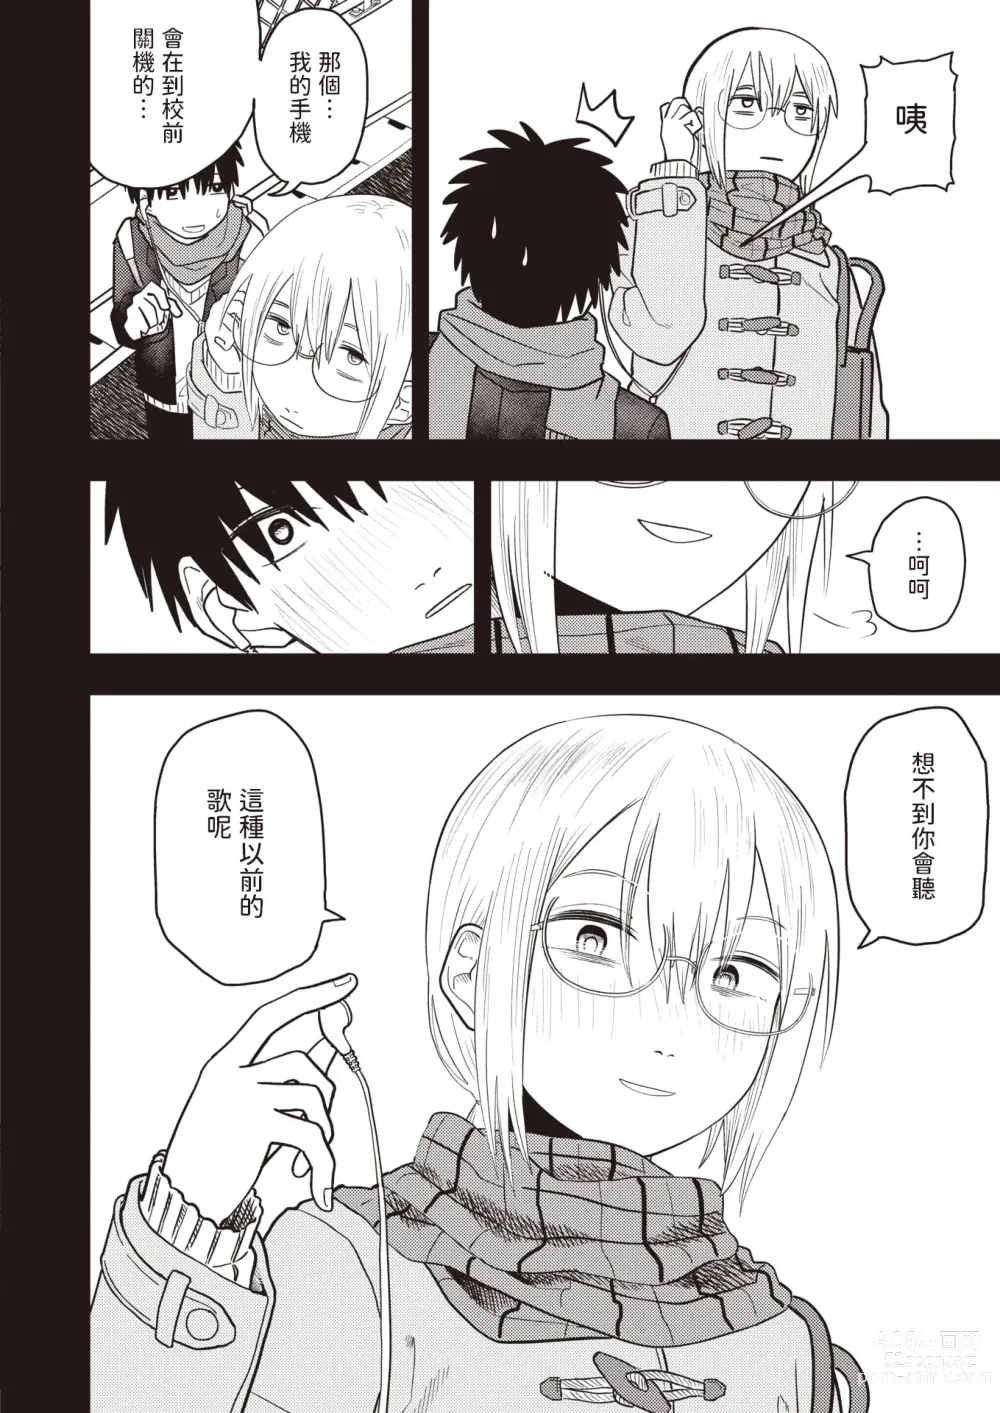 Page 16 of manga Hidoi yo Kiriyama Sensei - Thats really mean!